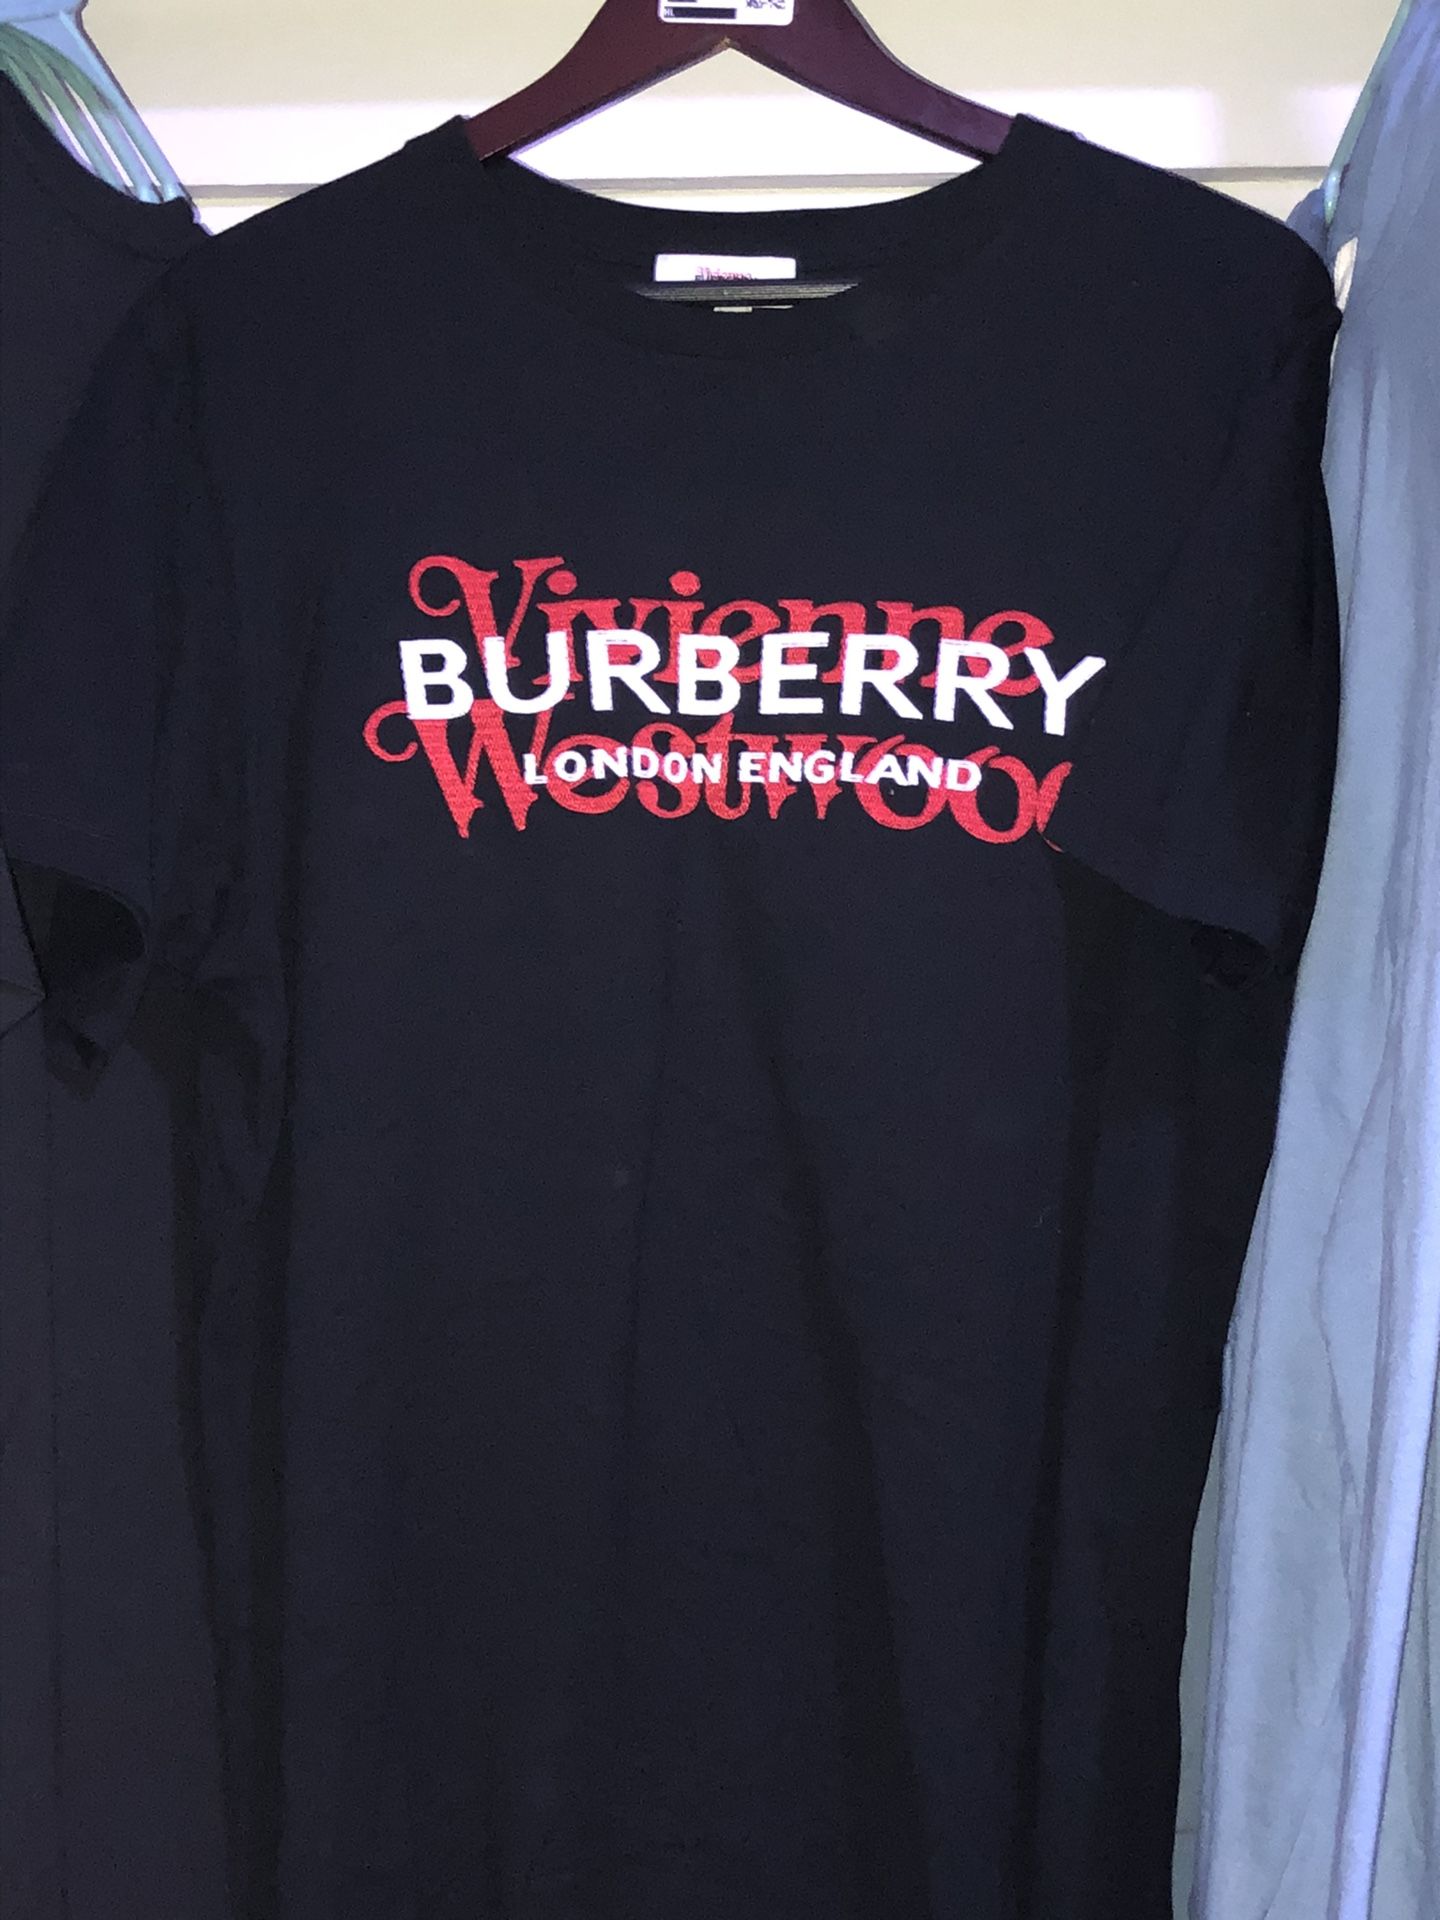 Vivienne Westwood Burberry shirt